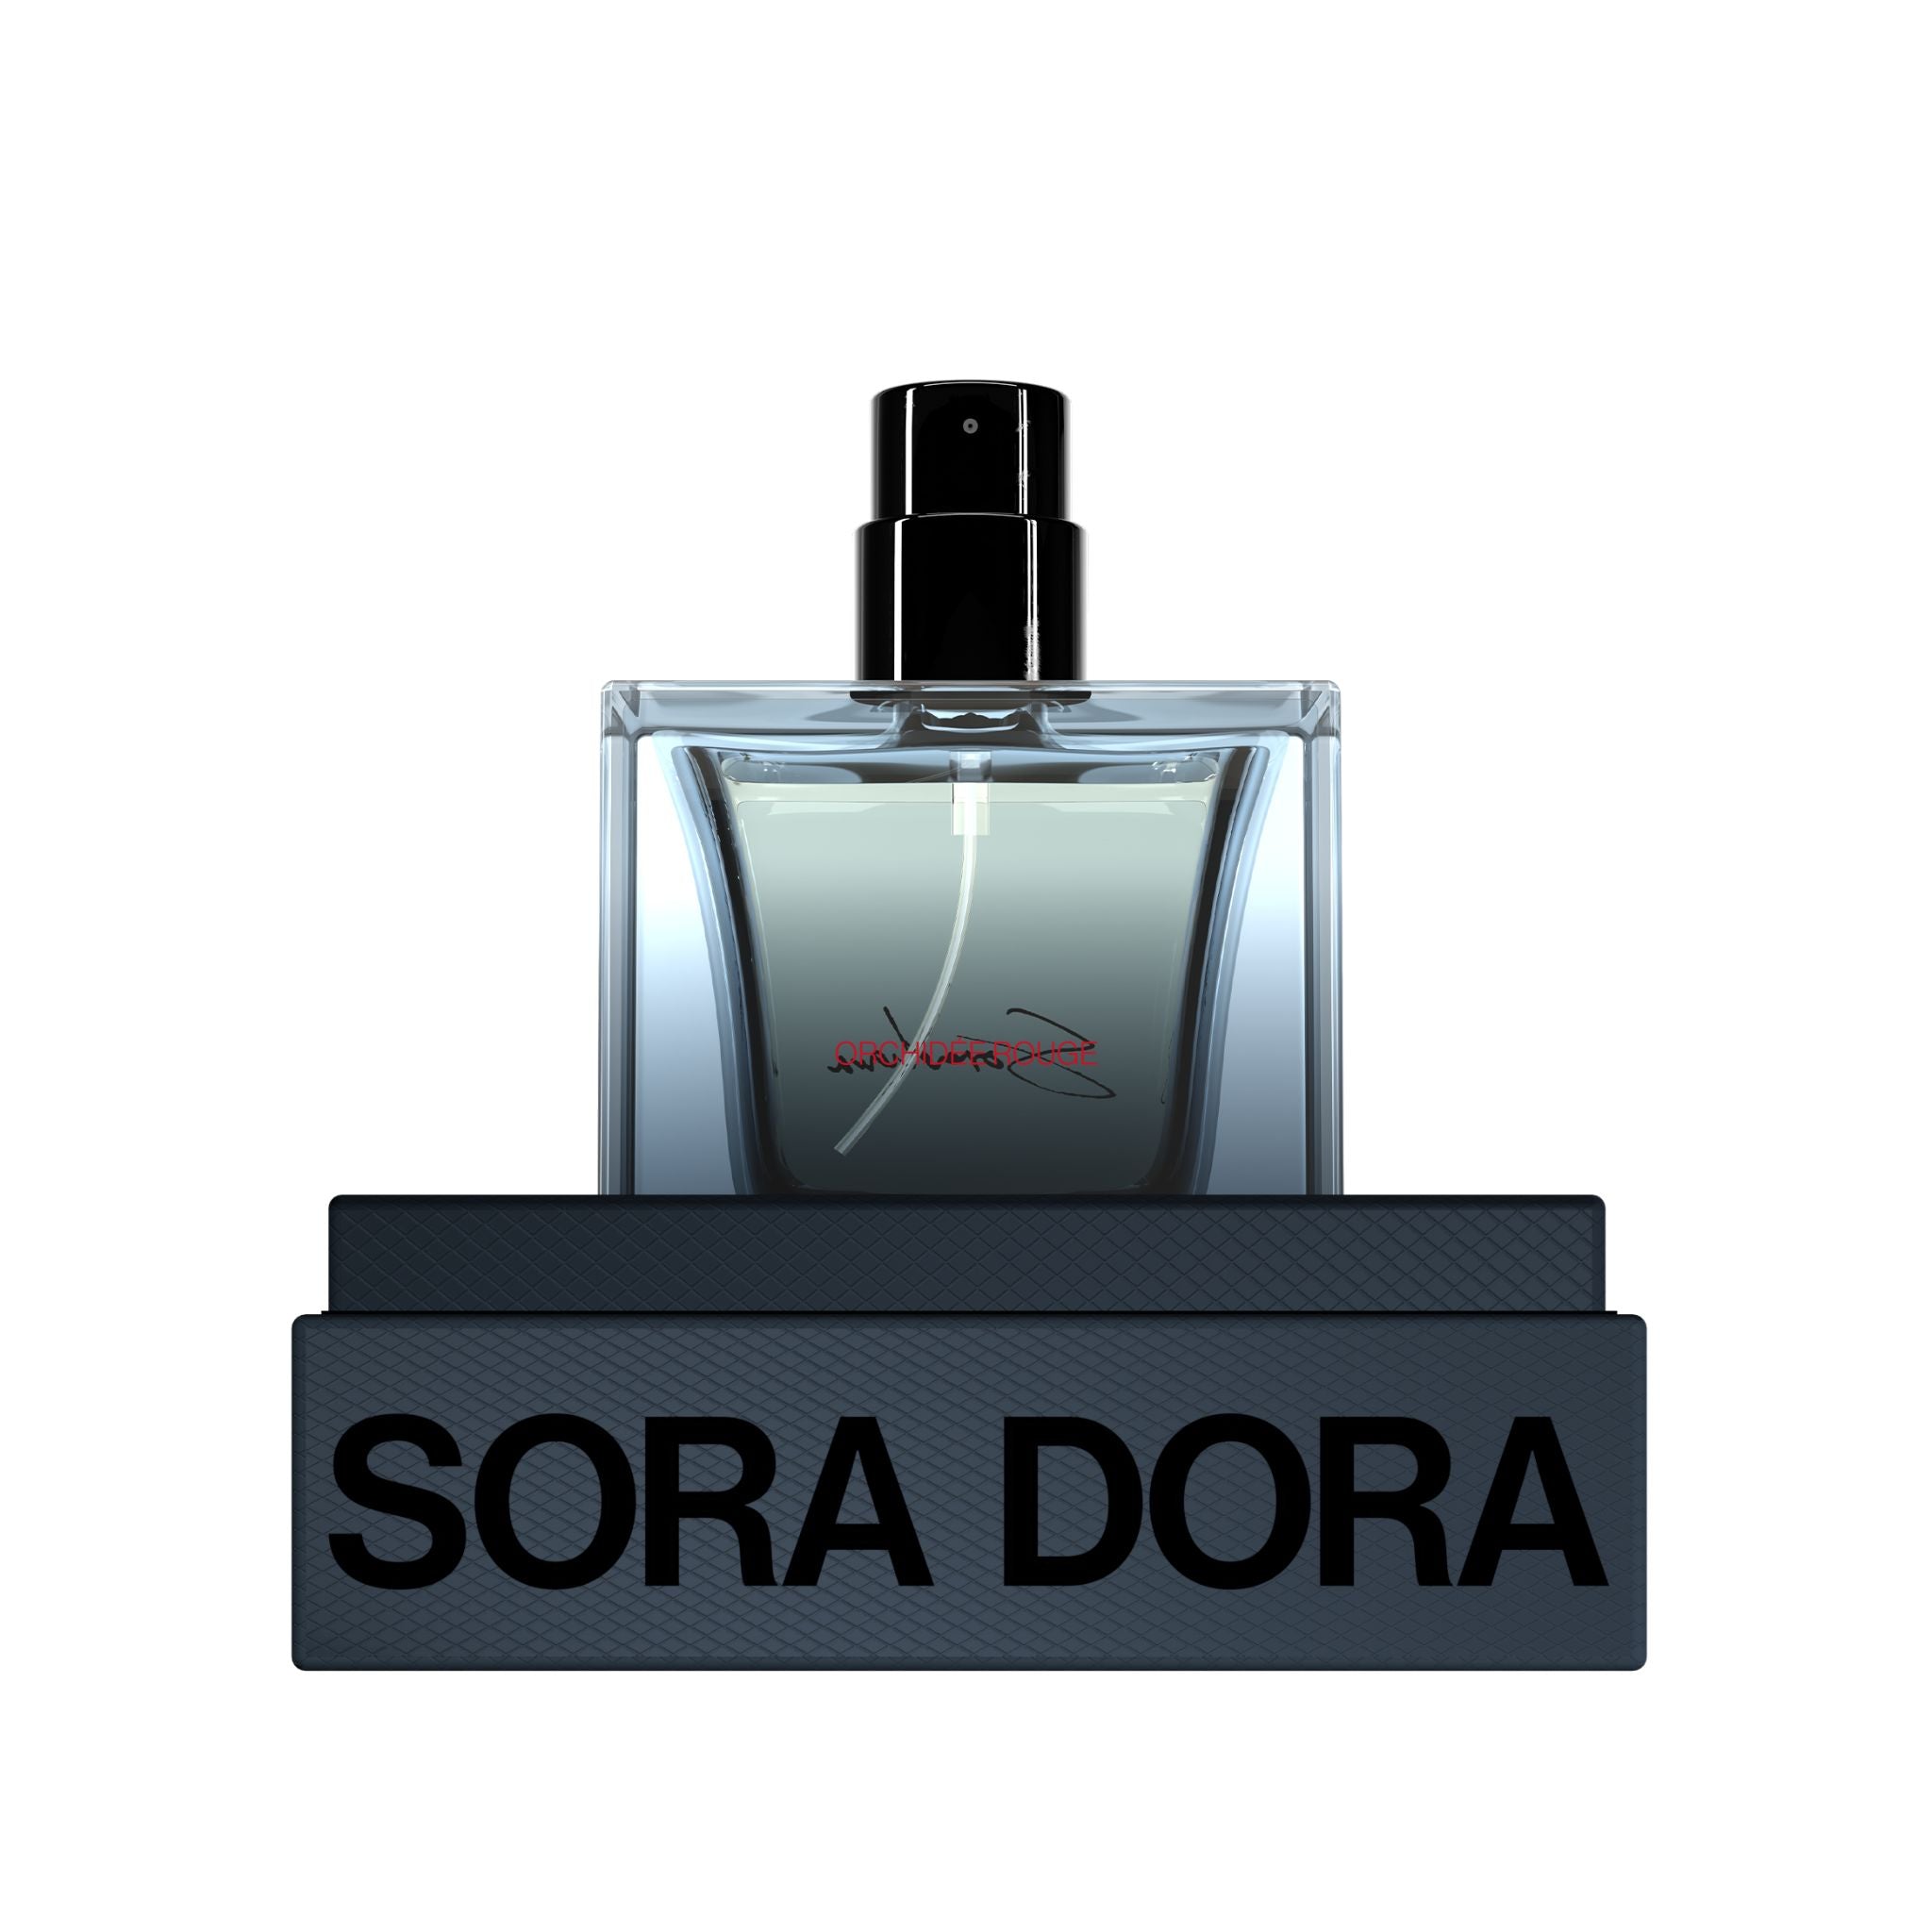    Orchidee Rouge Sora Dora Perfume